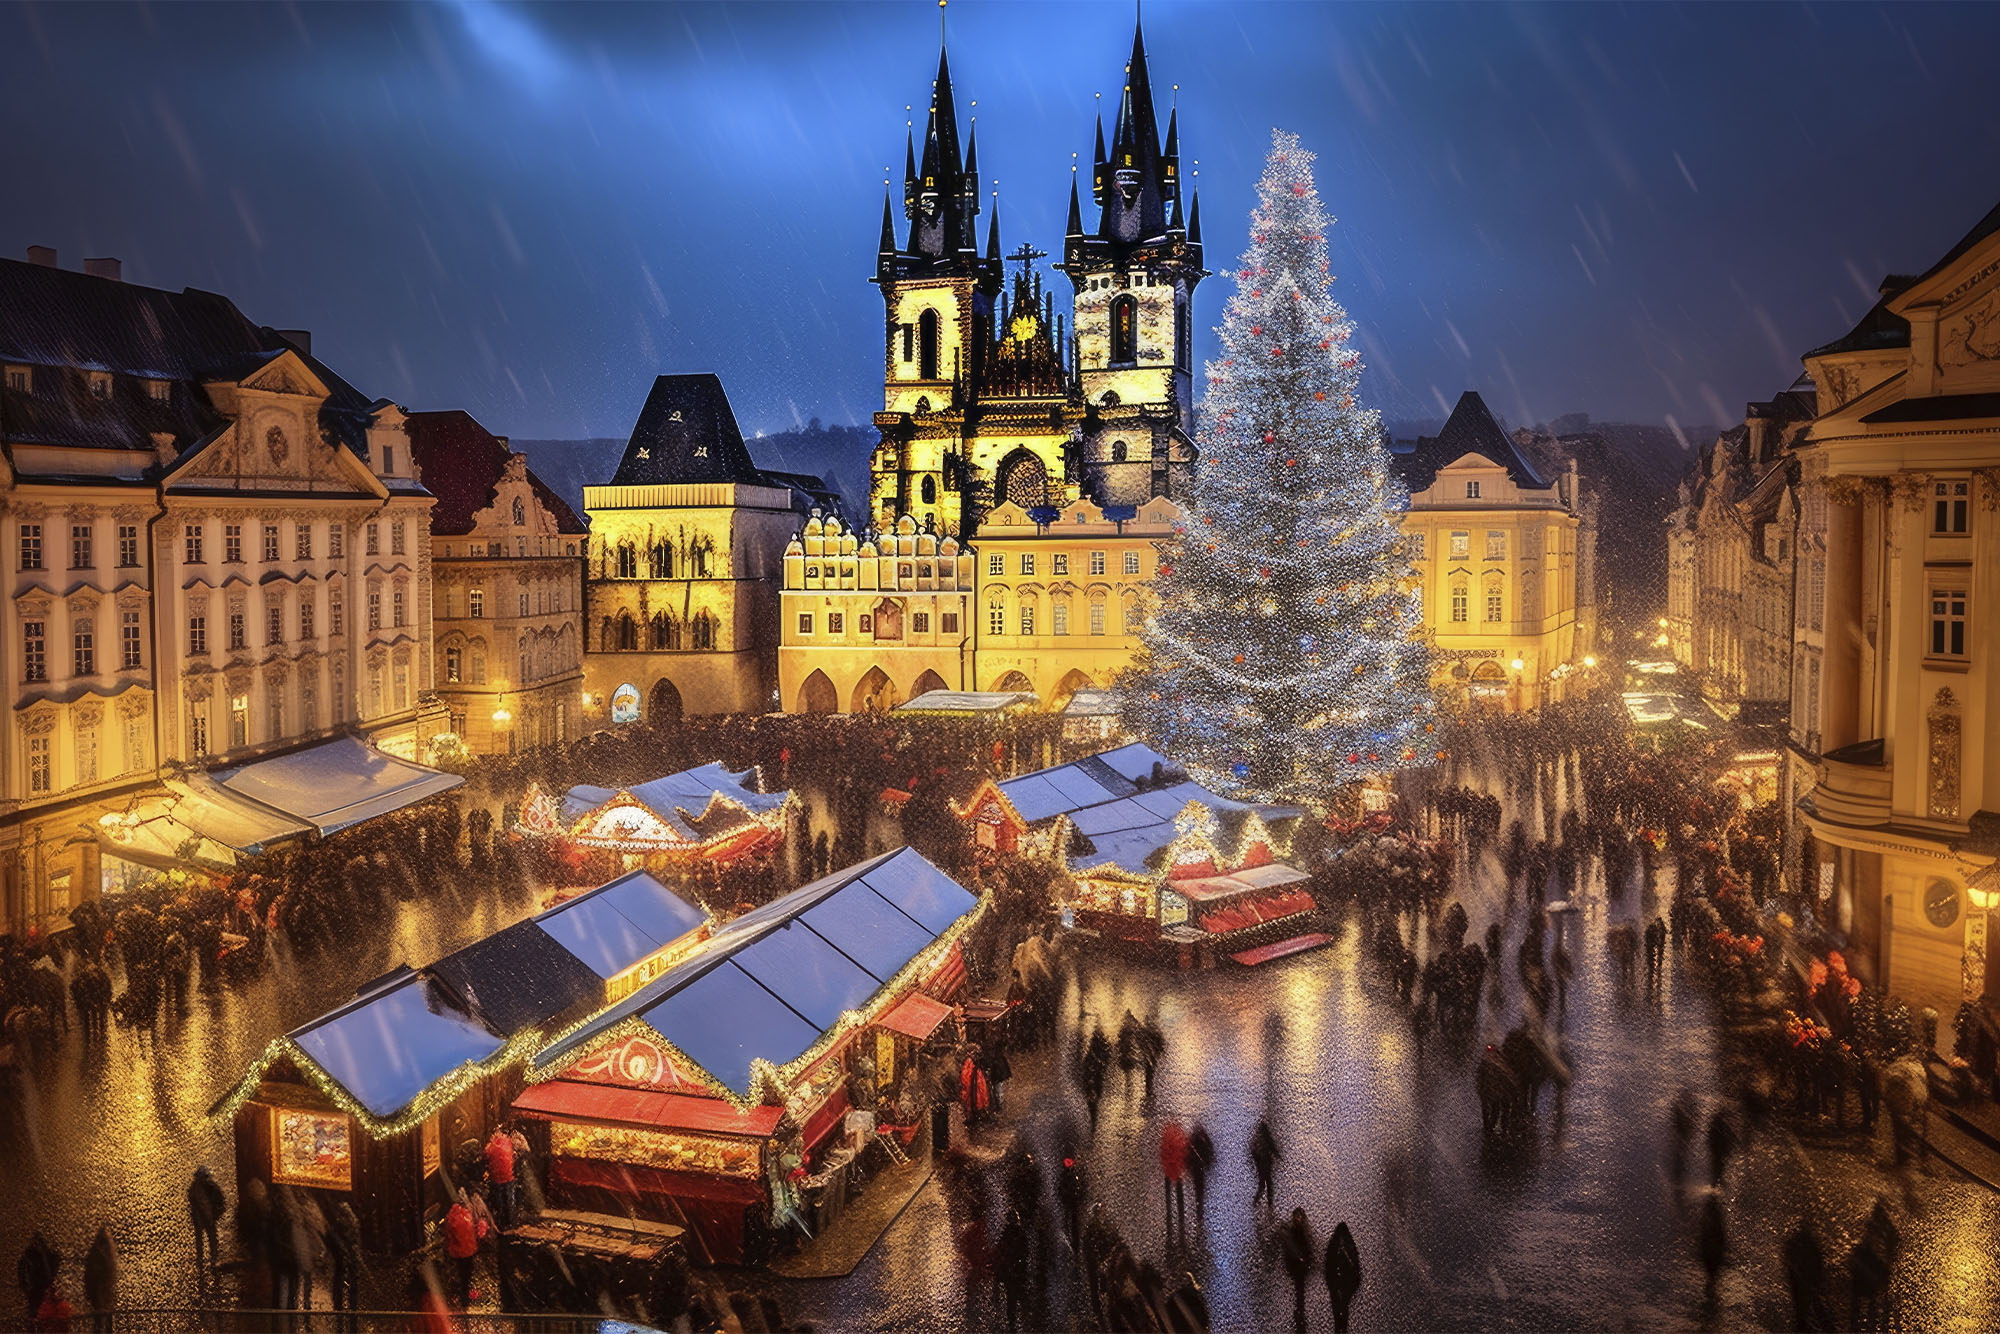 Prague, Czech Republic at Christmastime